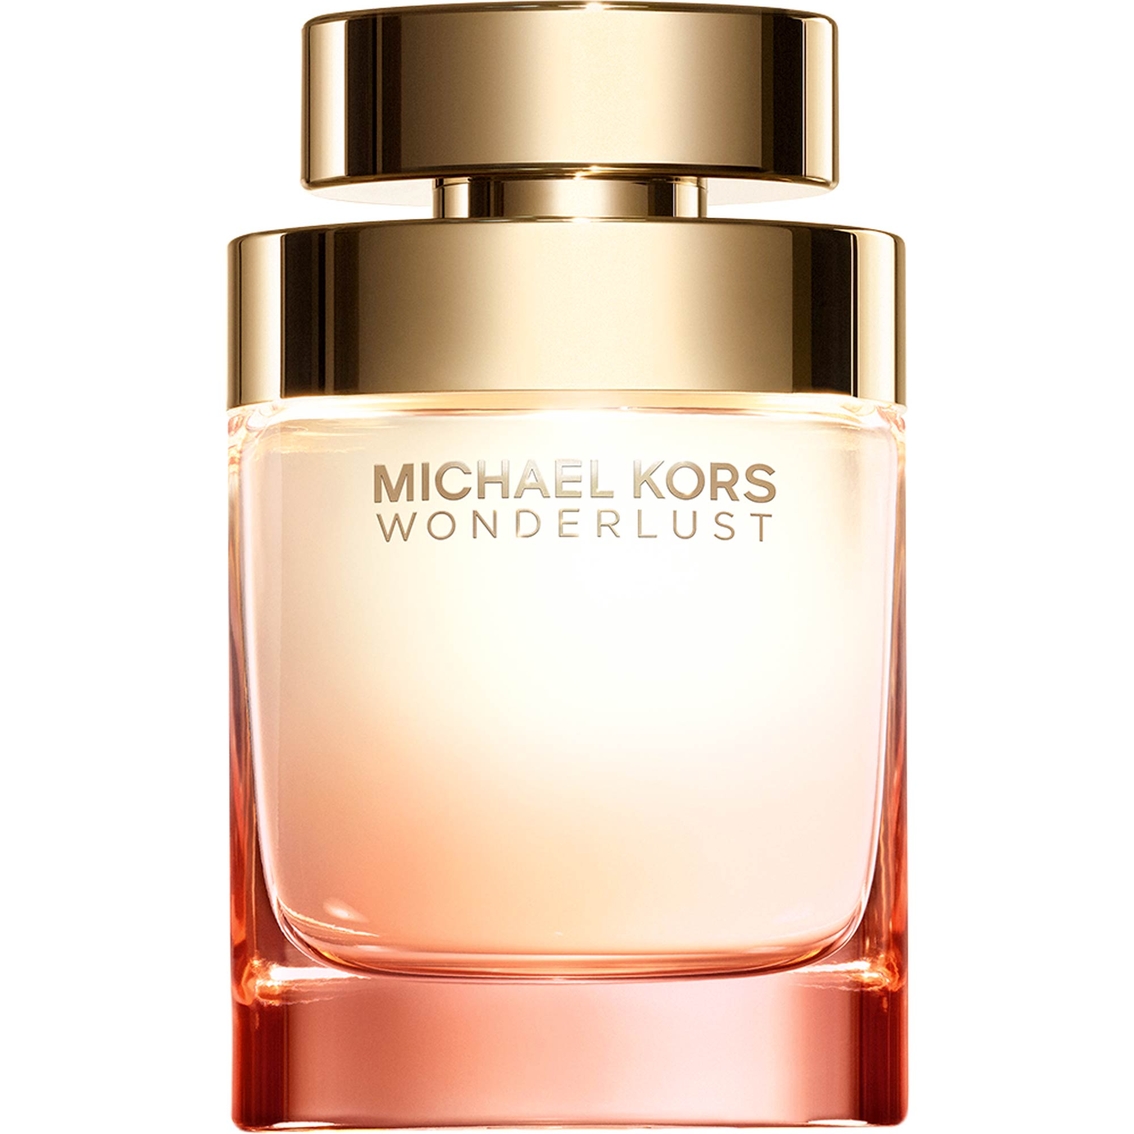 Michael Kors Wonderlust for Women Eau De Parfum Spray - Image 1 of 2